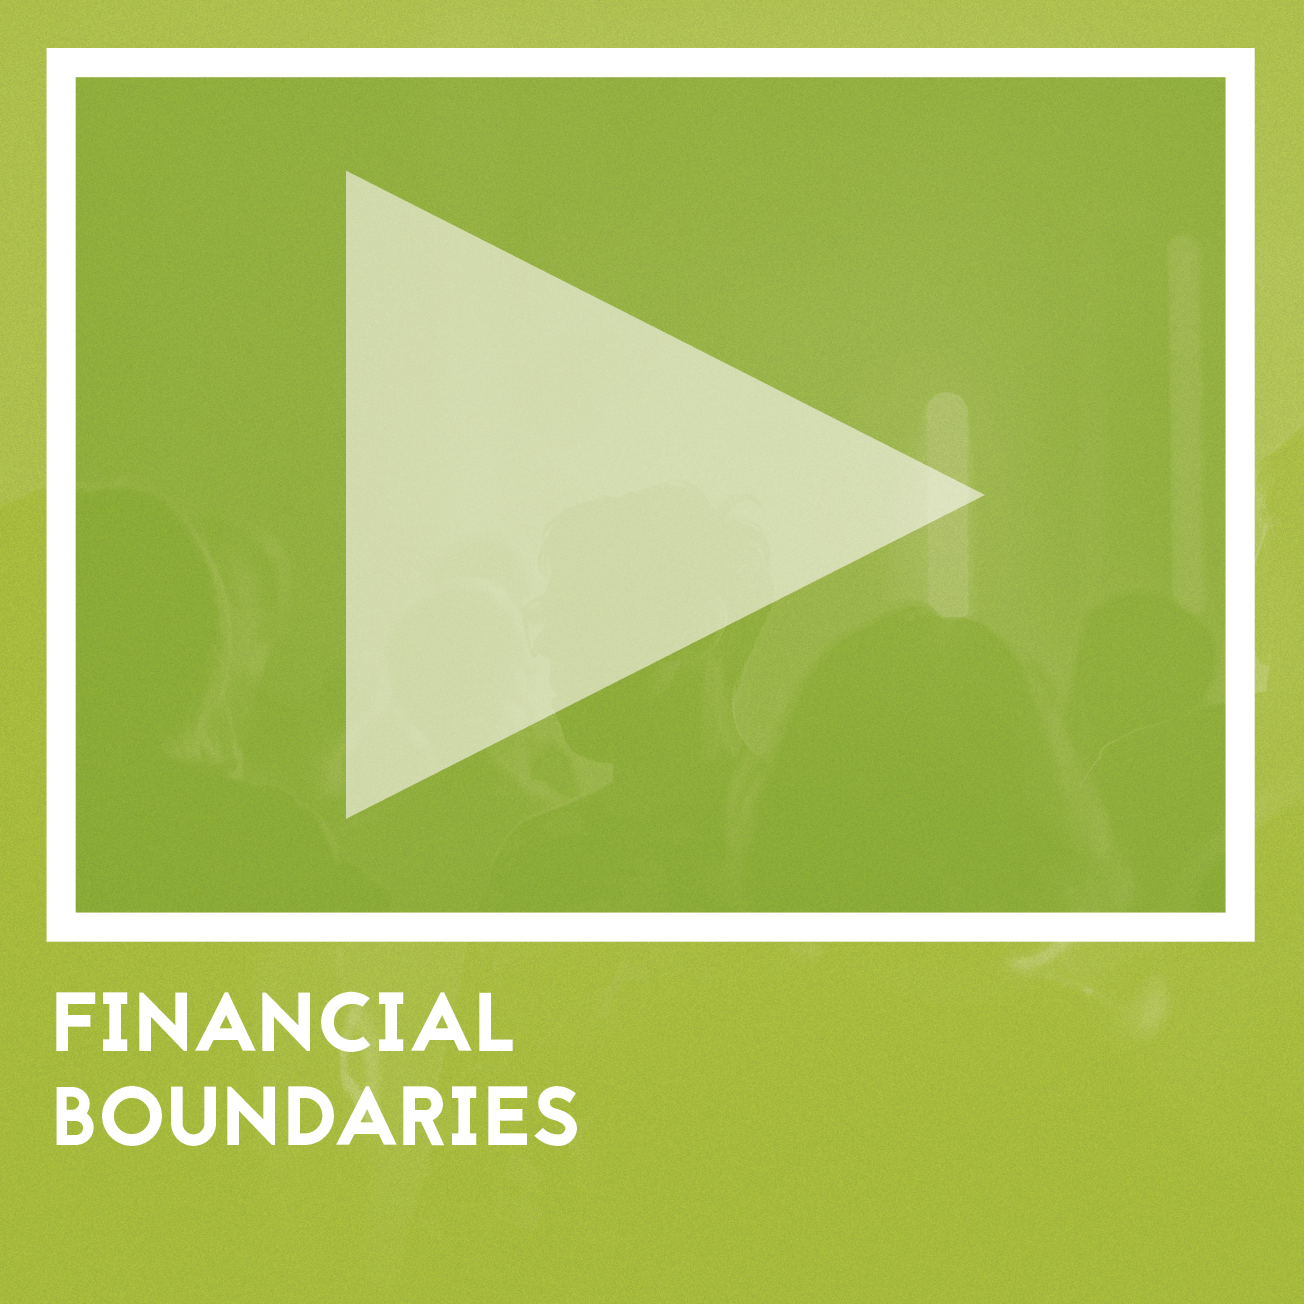 Financial Boundaries